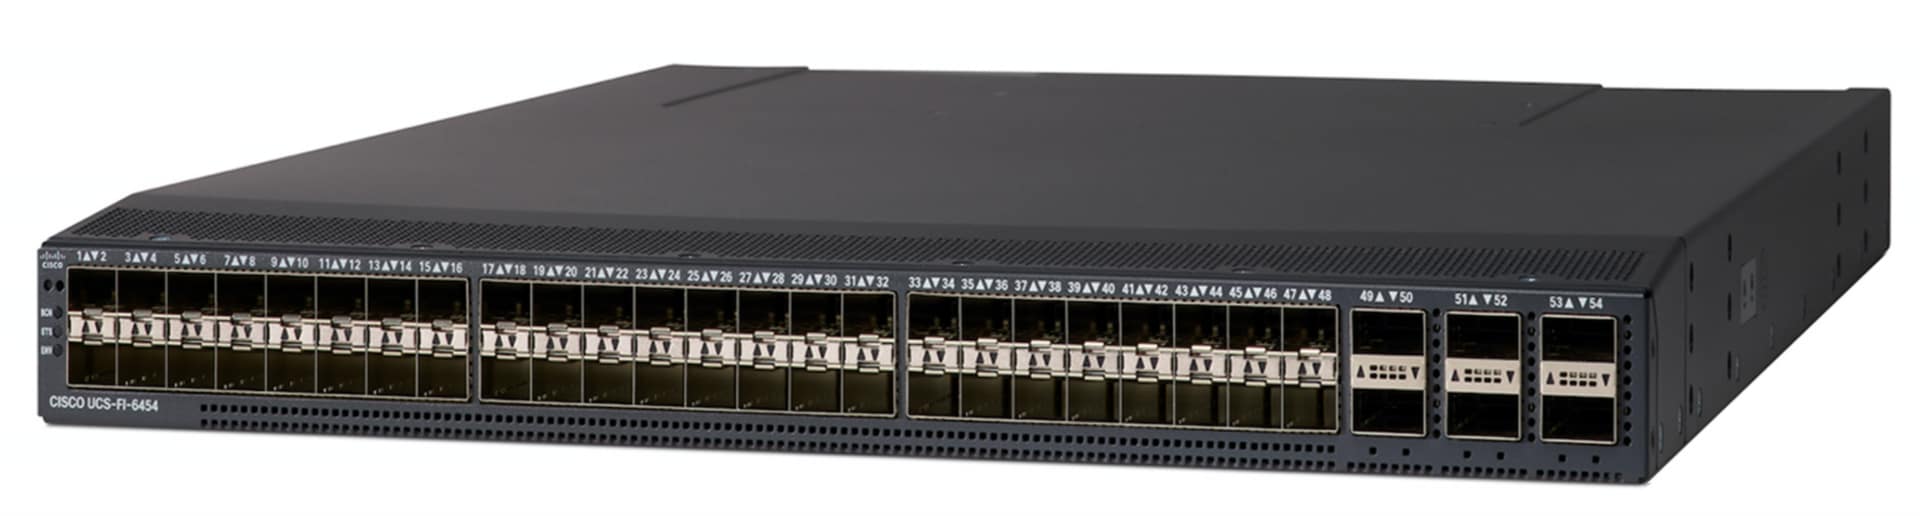 Cisco UCS 6454 Fabric Interconnect Switch